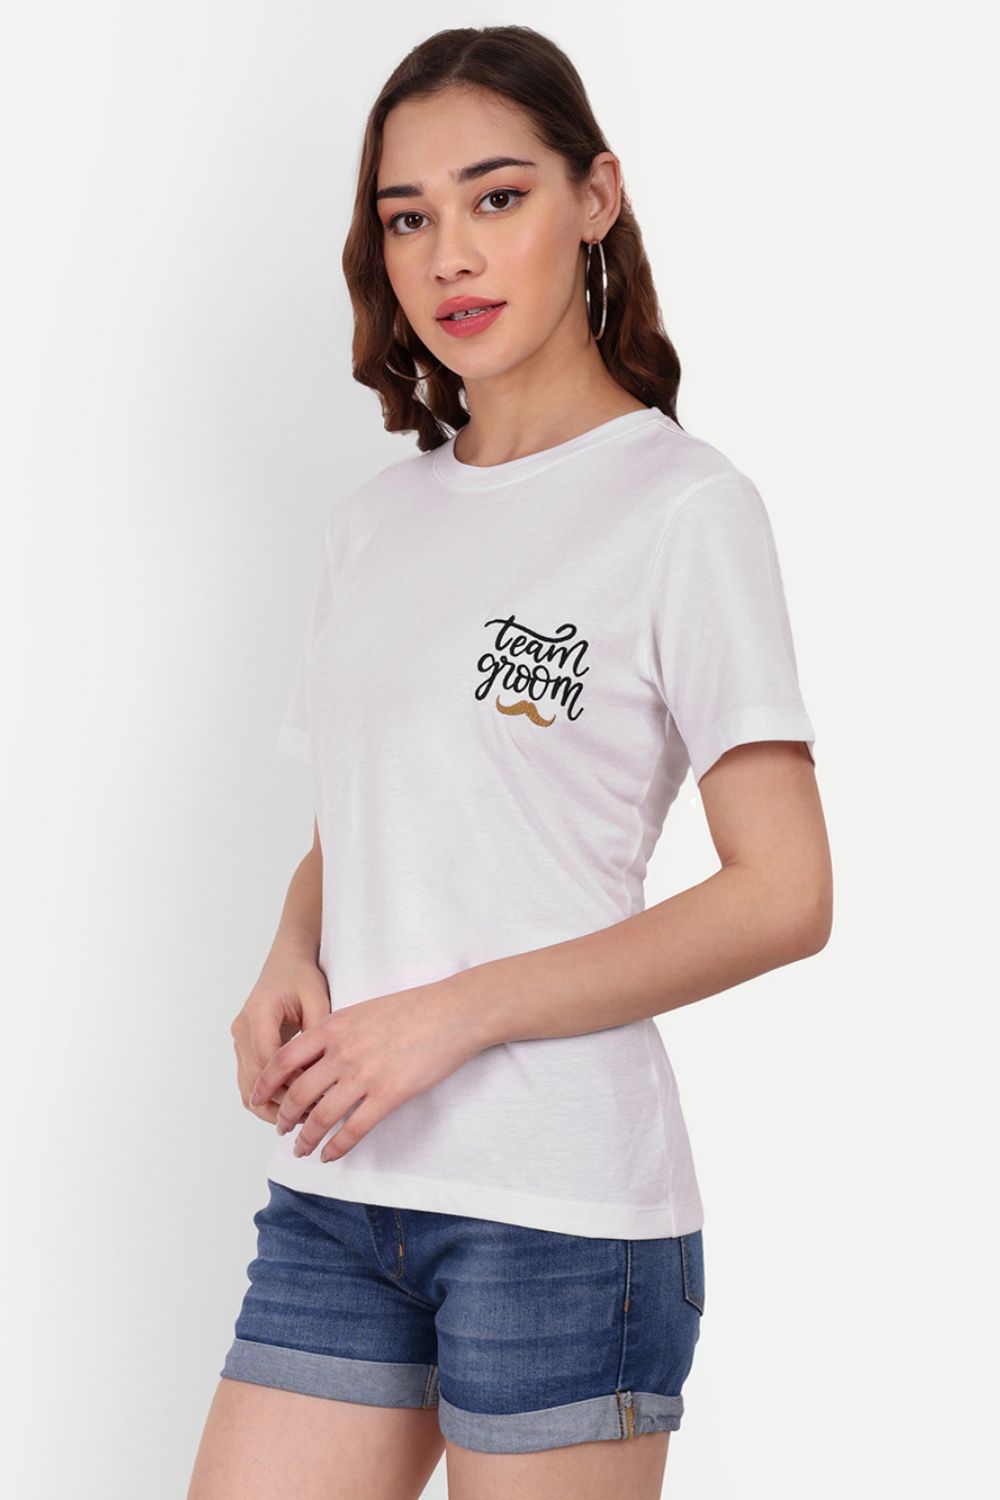 Team Groom T-Shirt